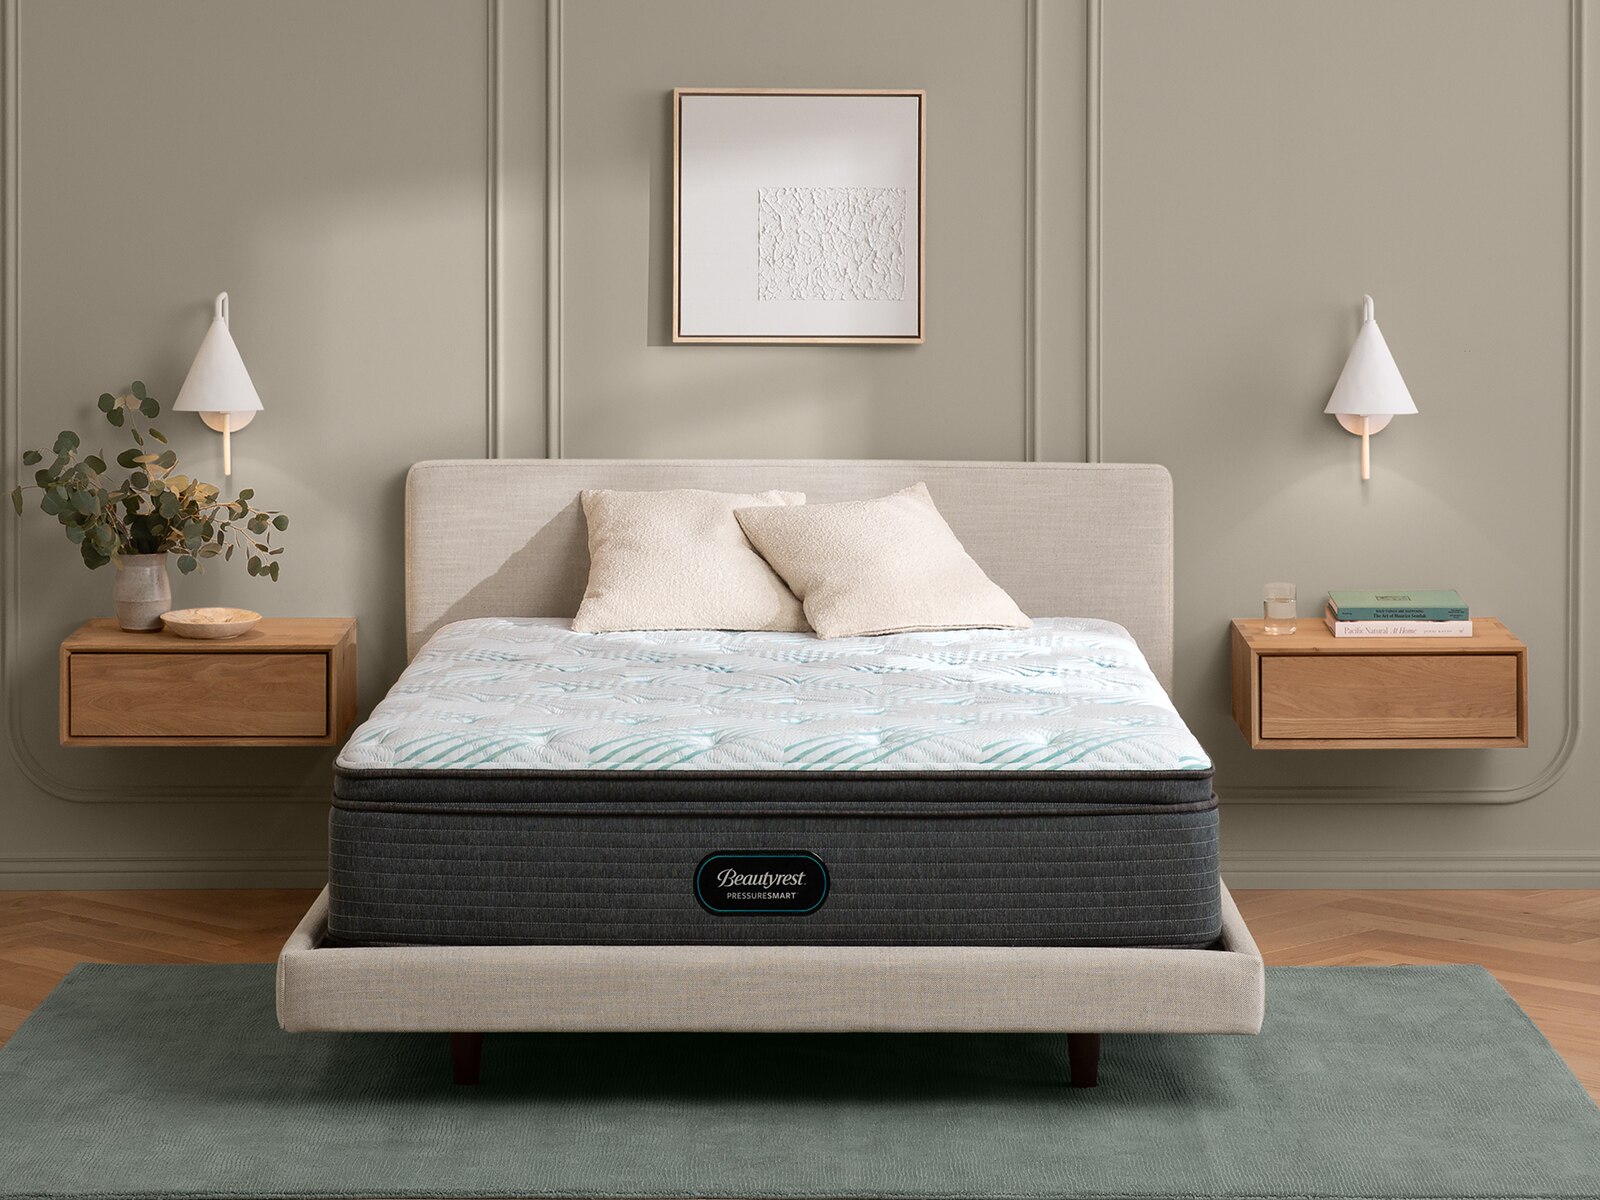 beautyrest pressuresmart plush queen mattress